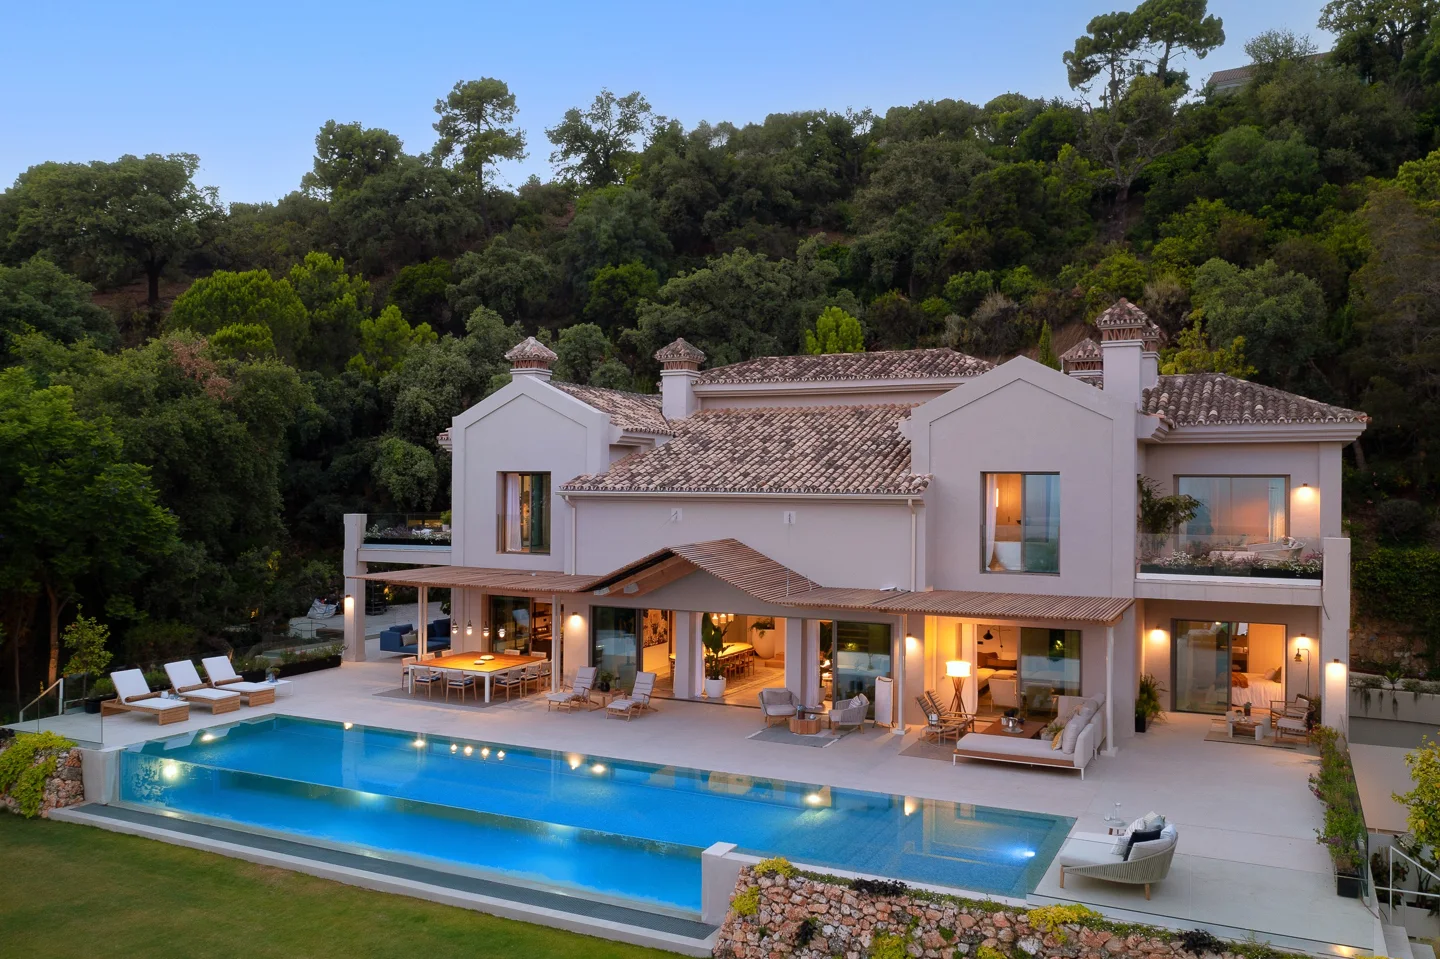 La Zagaleta: Exquisite Villa with panoramic views